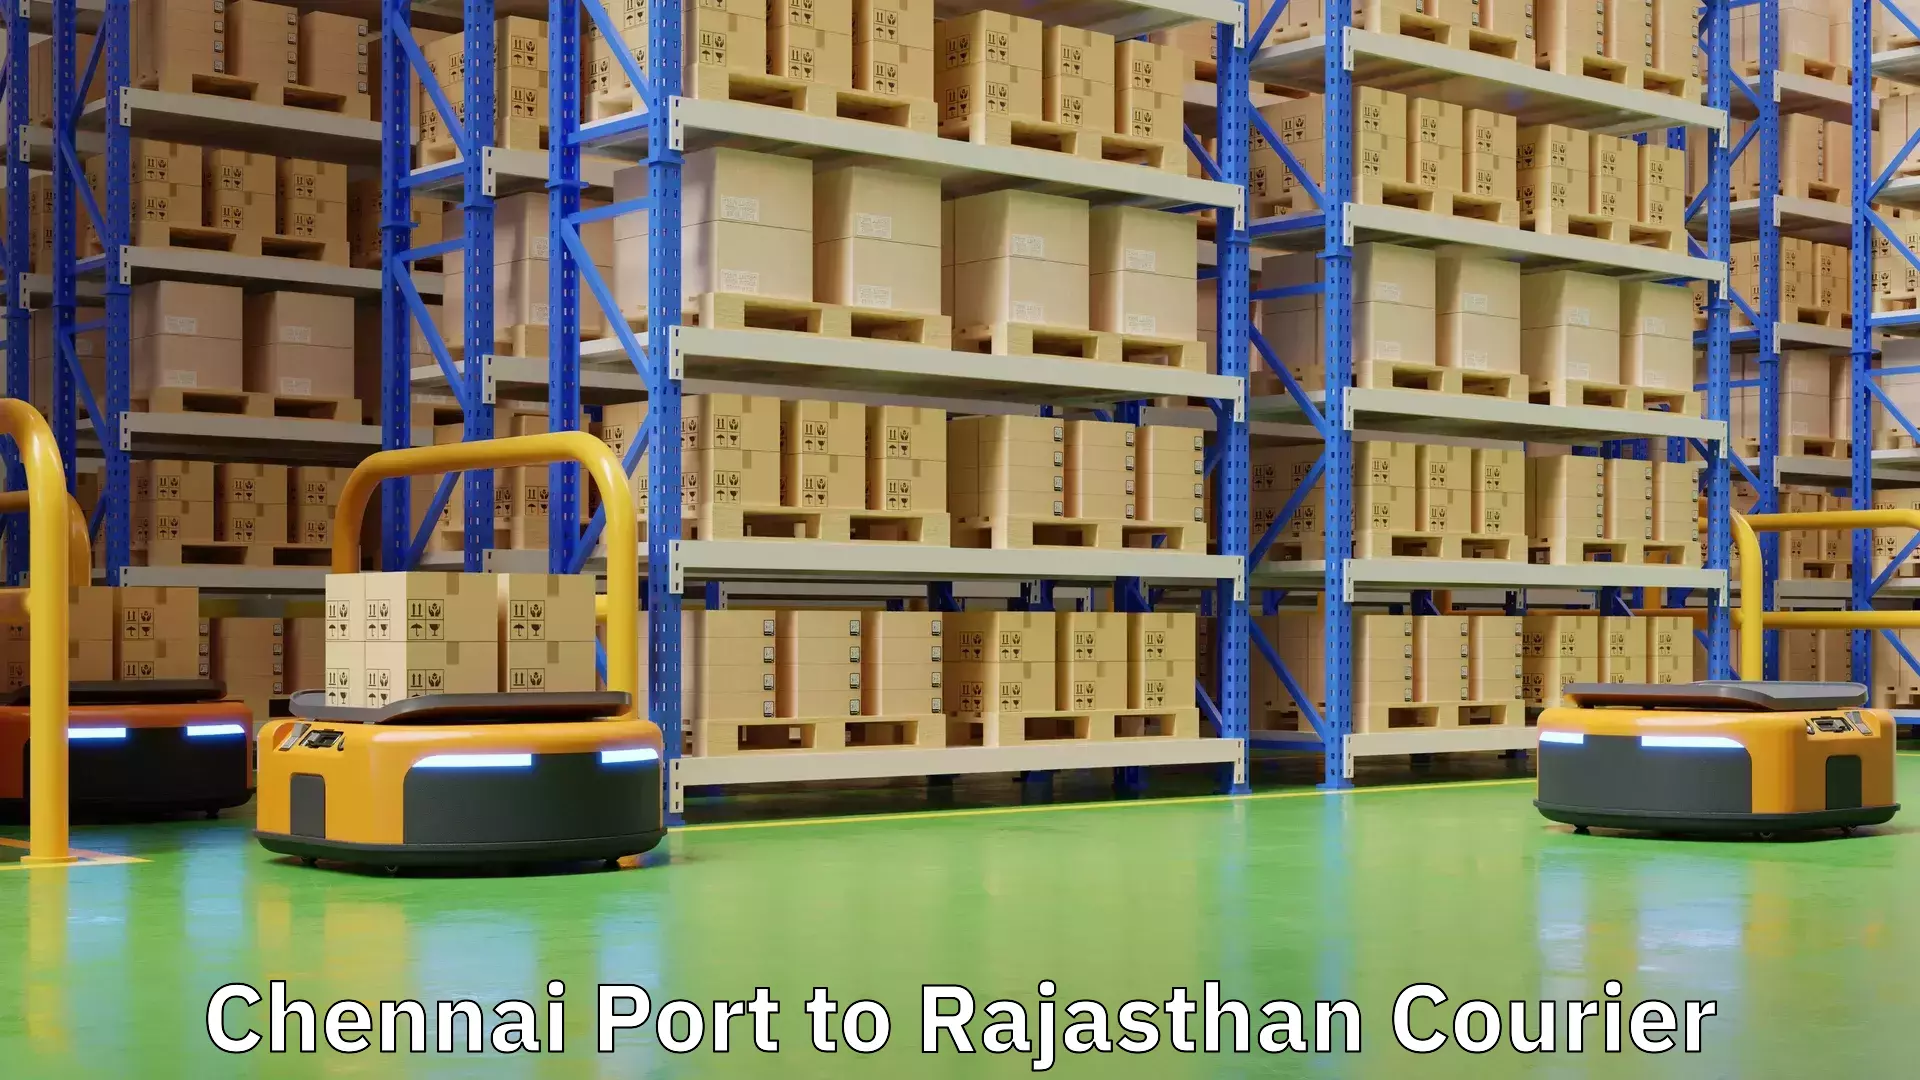 International parcel service Chennai Port to Rajasthan